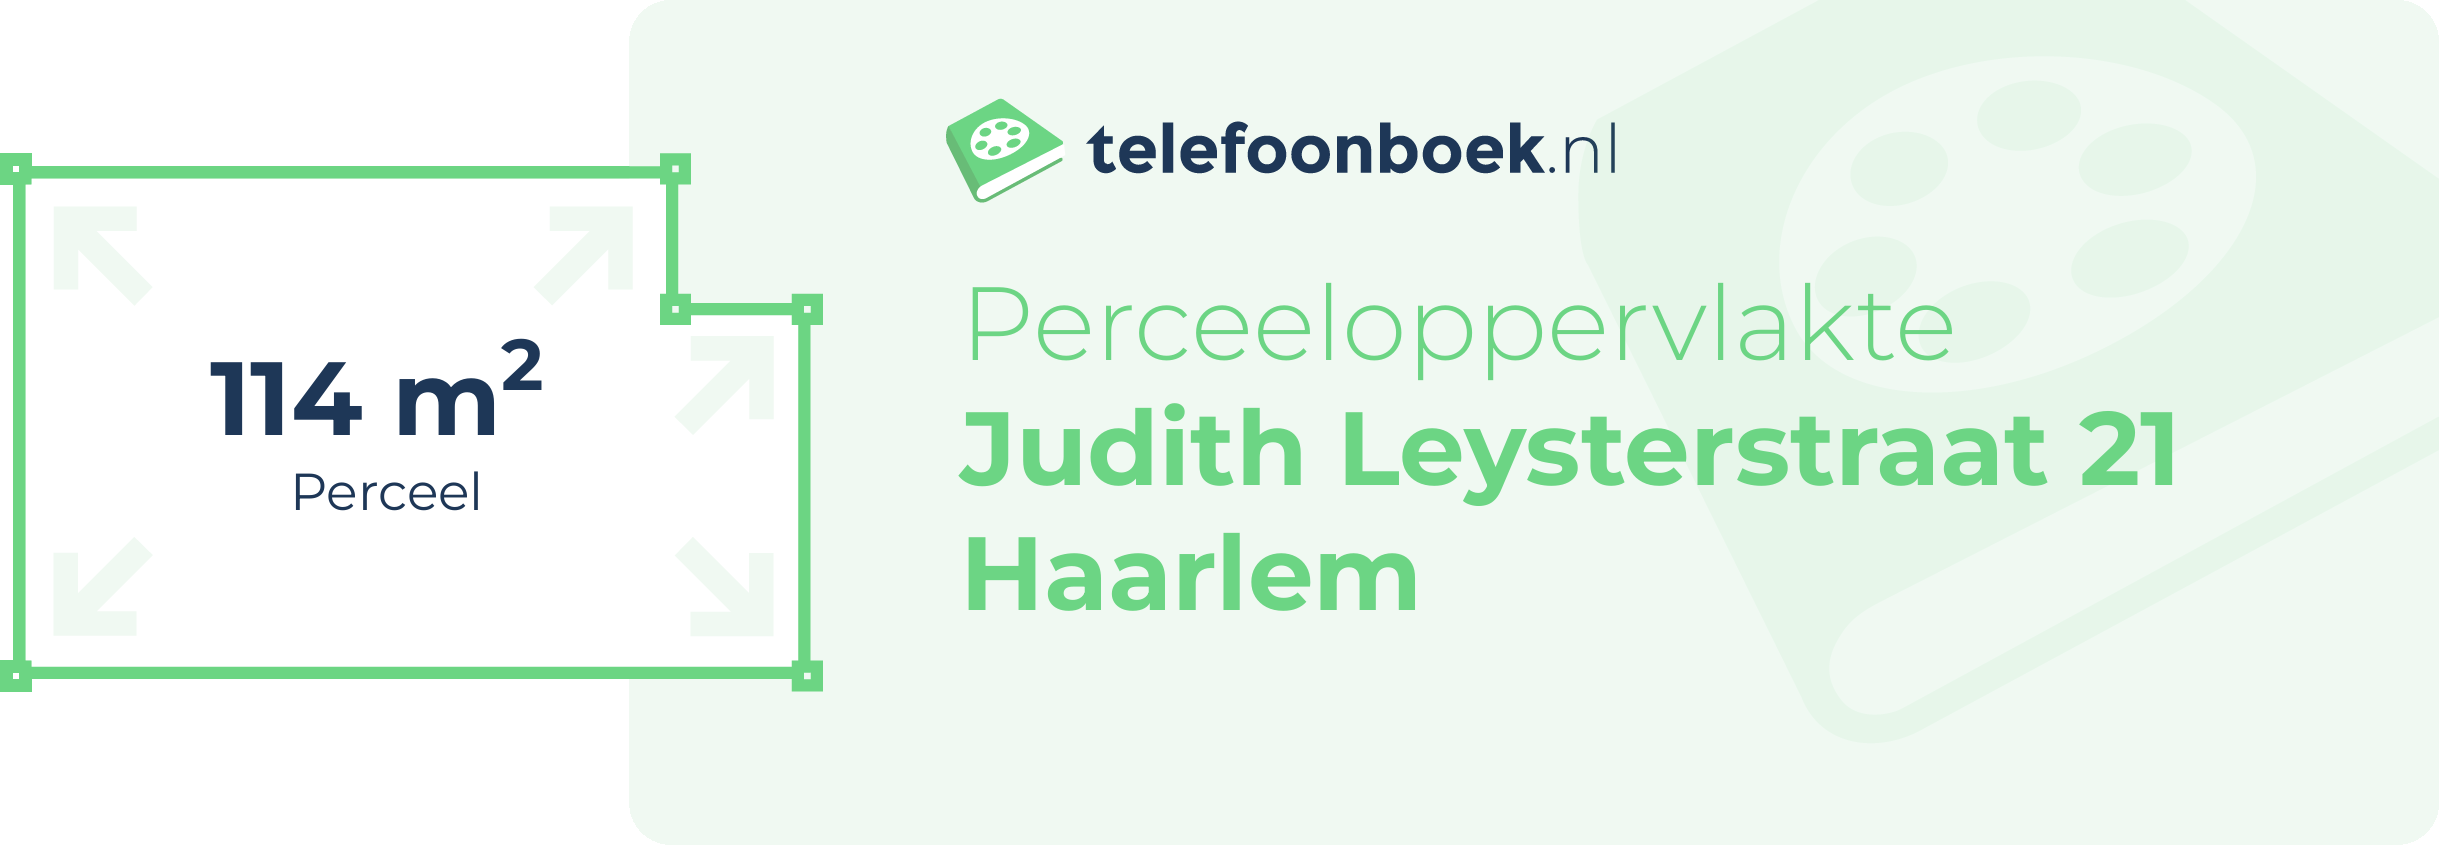 Perceeloppervlakte Judith Leysterstraat 21 Haarlem